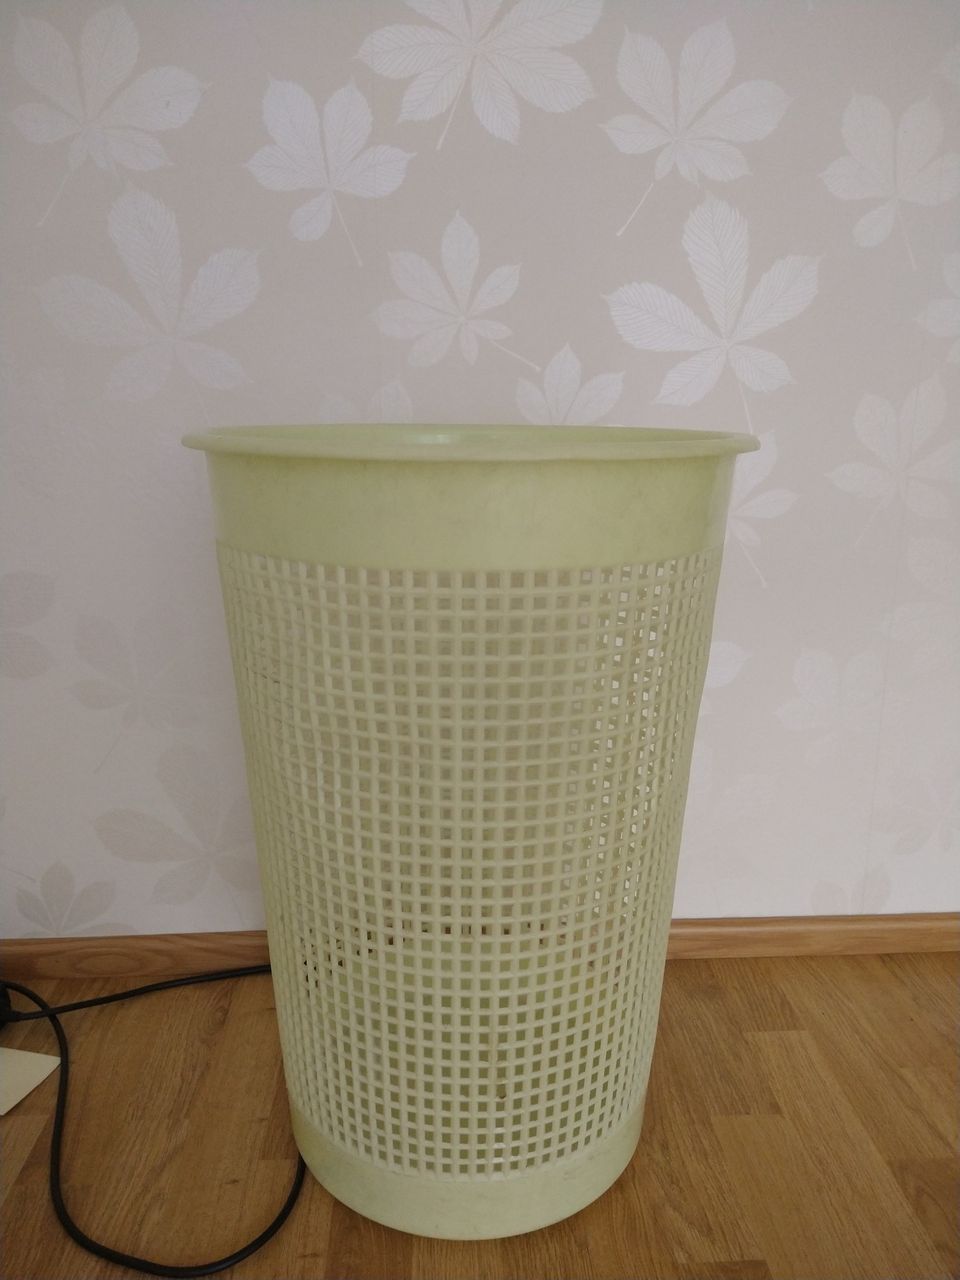 Big plastic basket